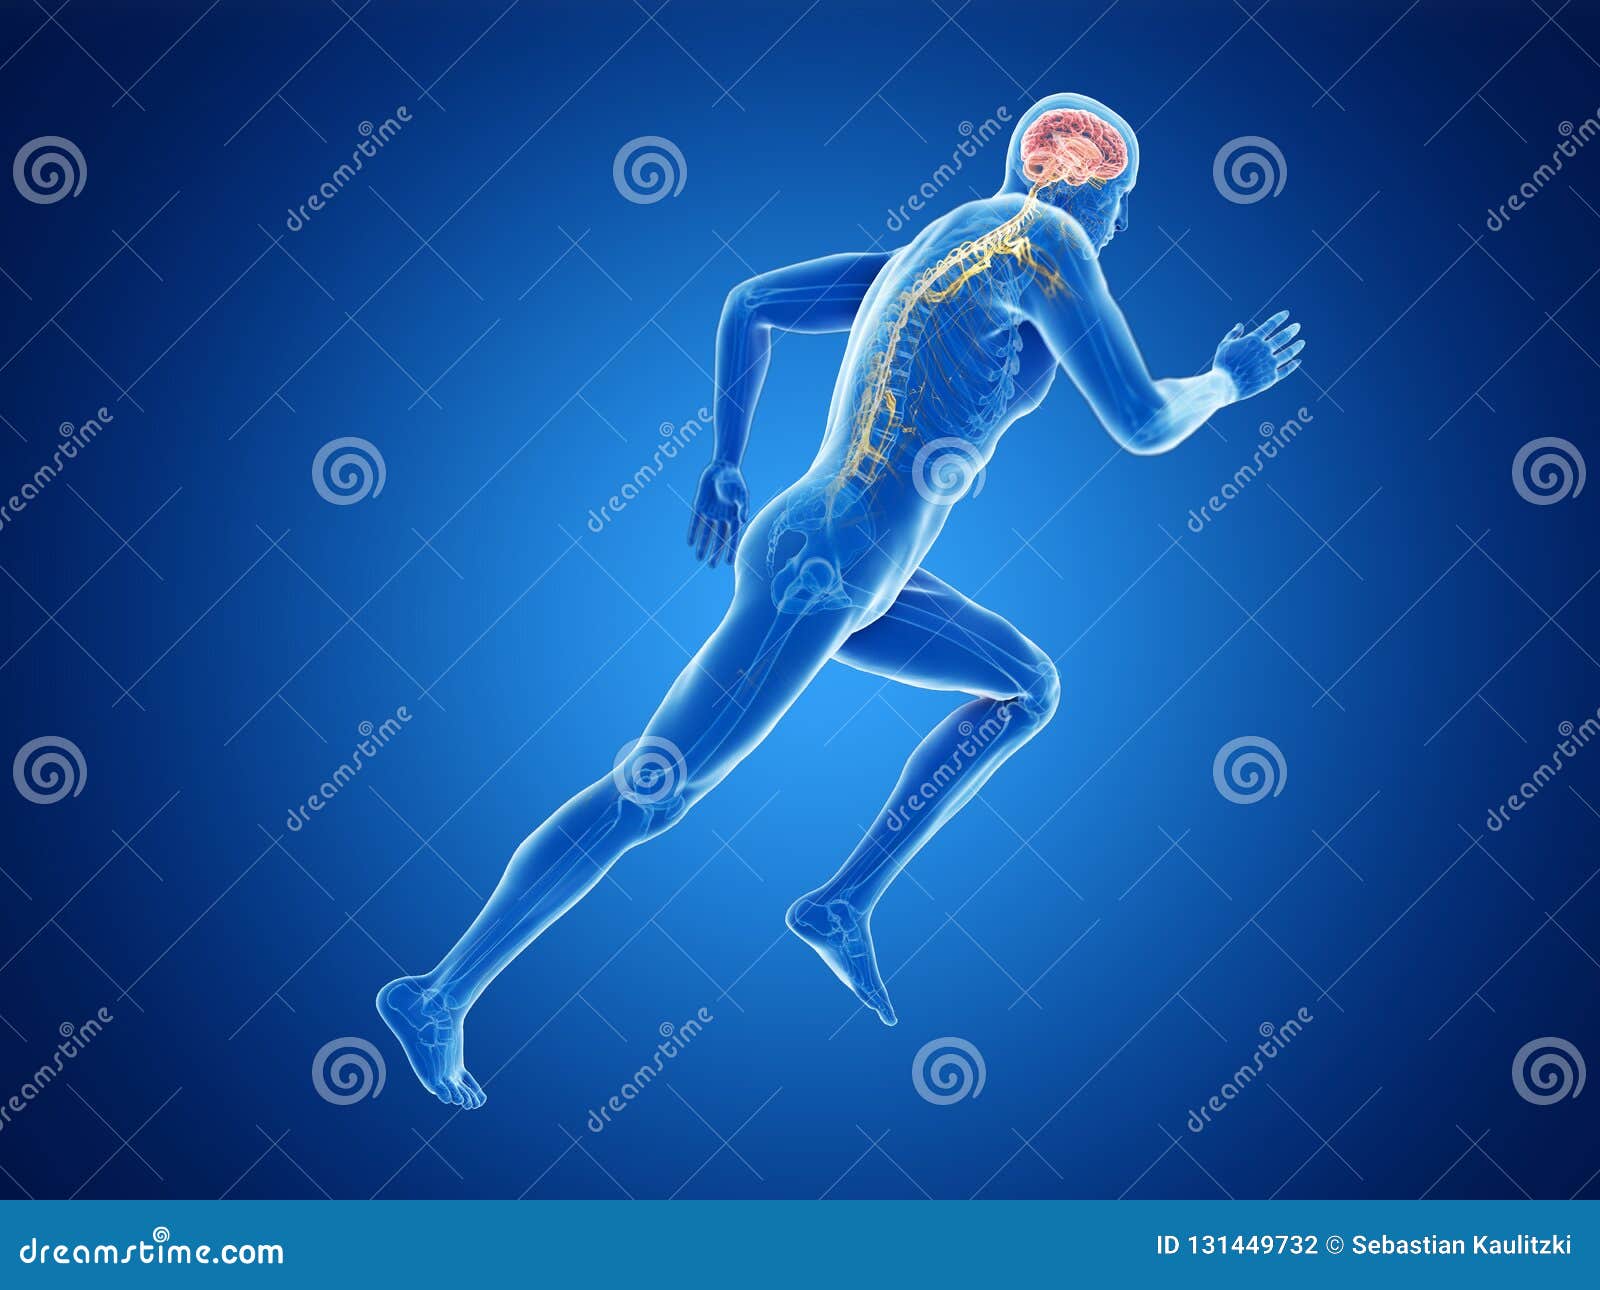 a joggers brain